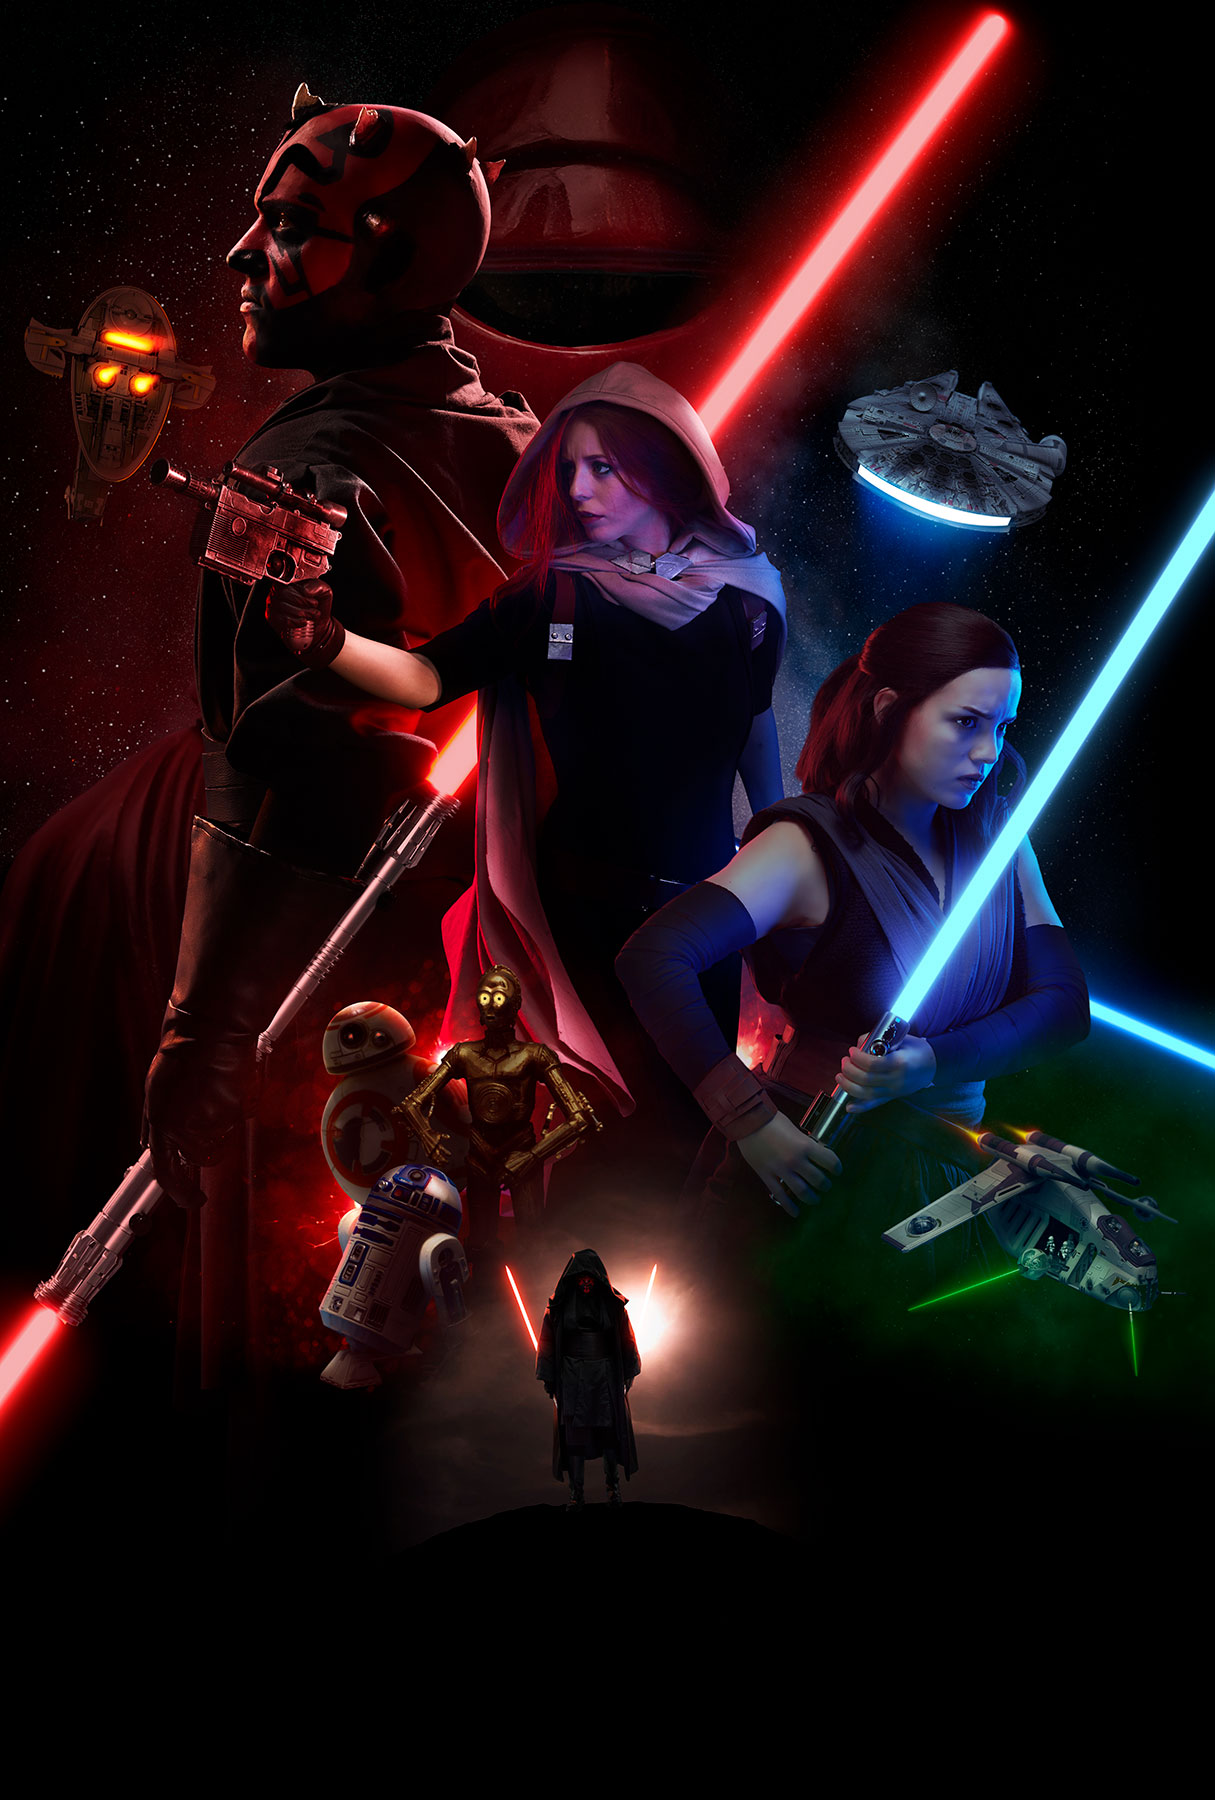 Sayanoff Arthur Star Wars Poster 02 14